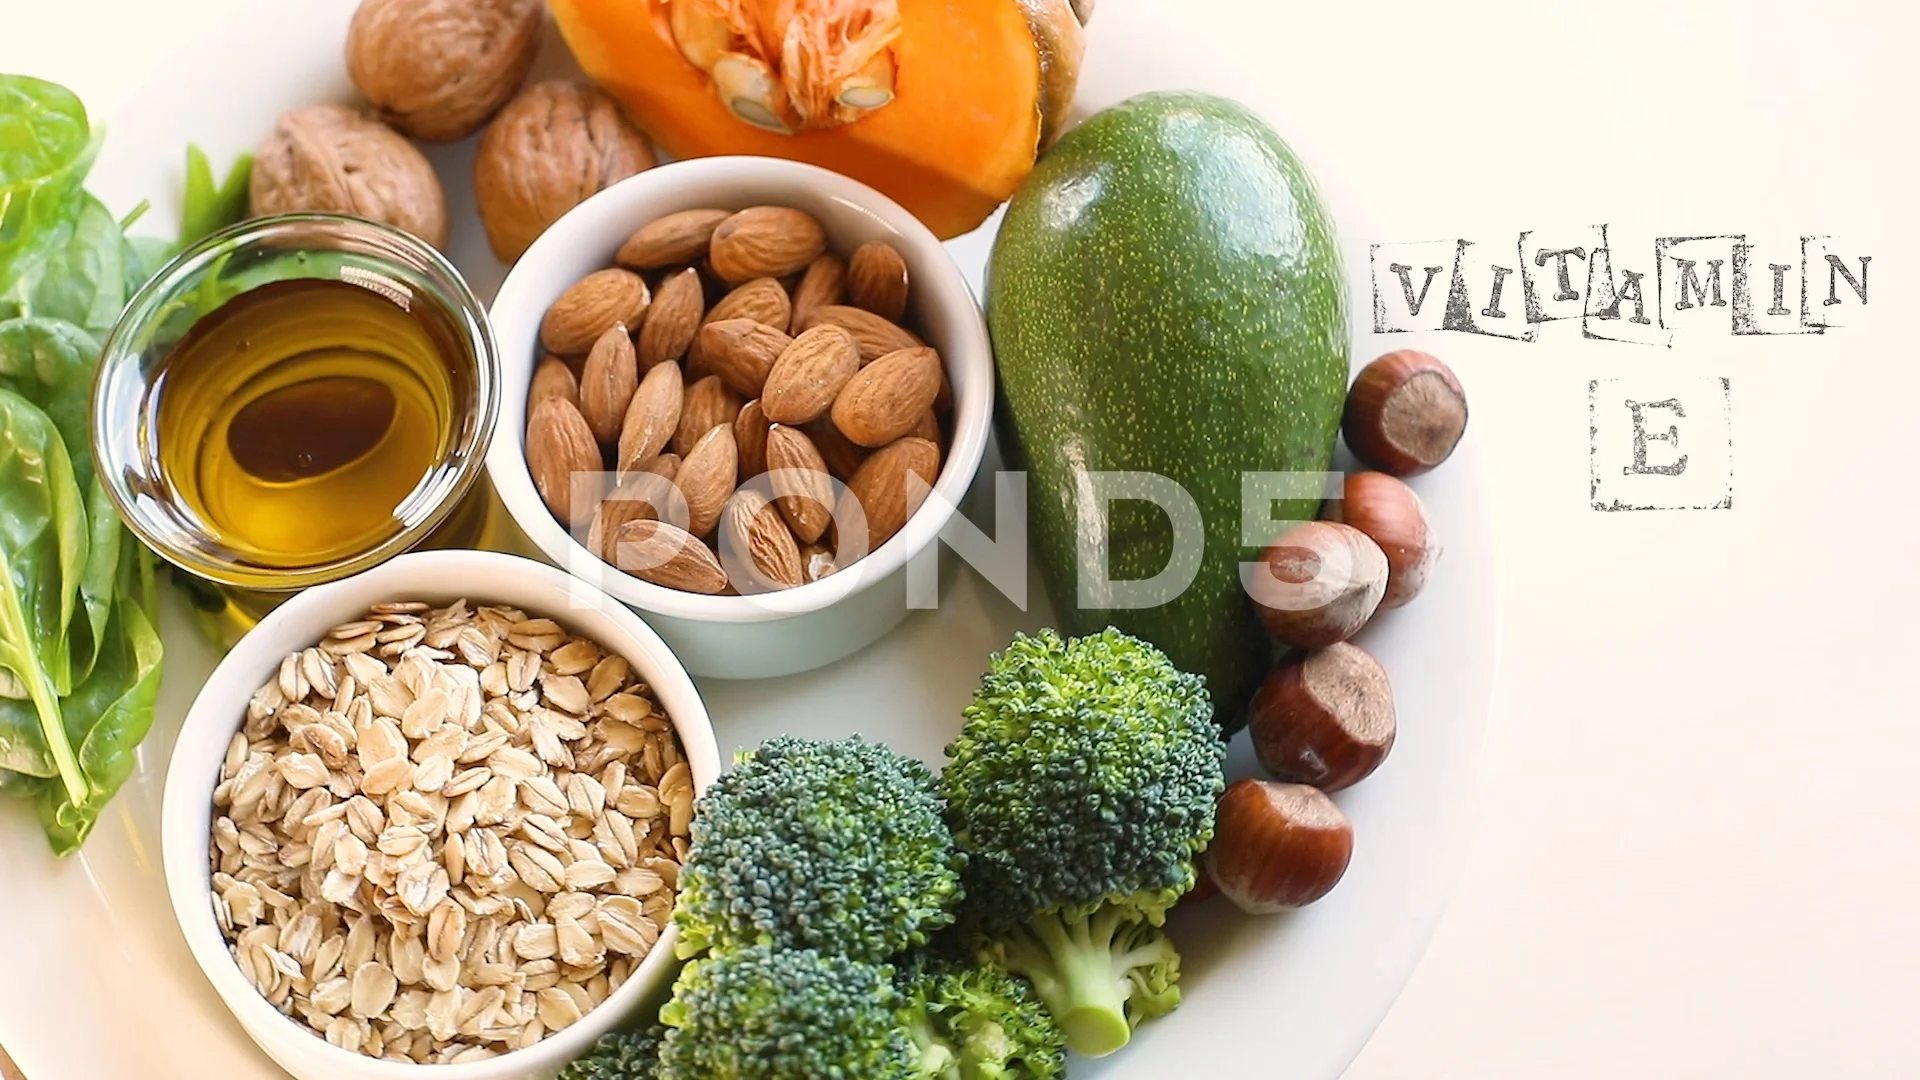 high vitamin e foods